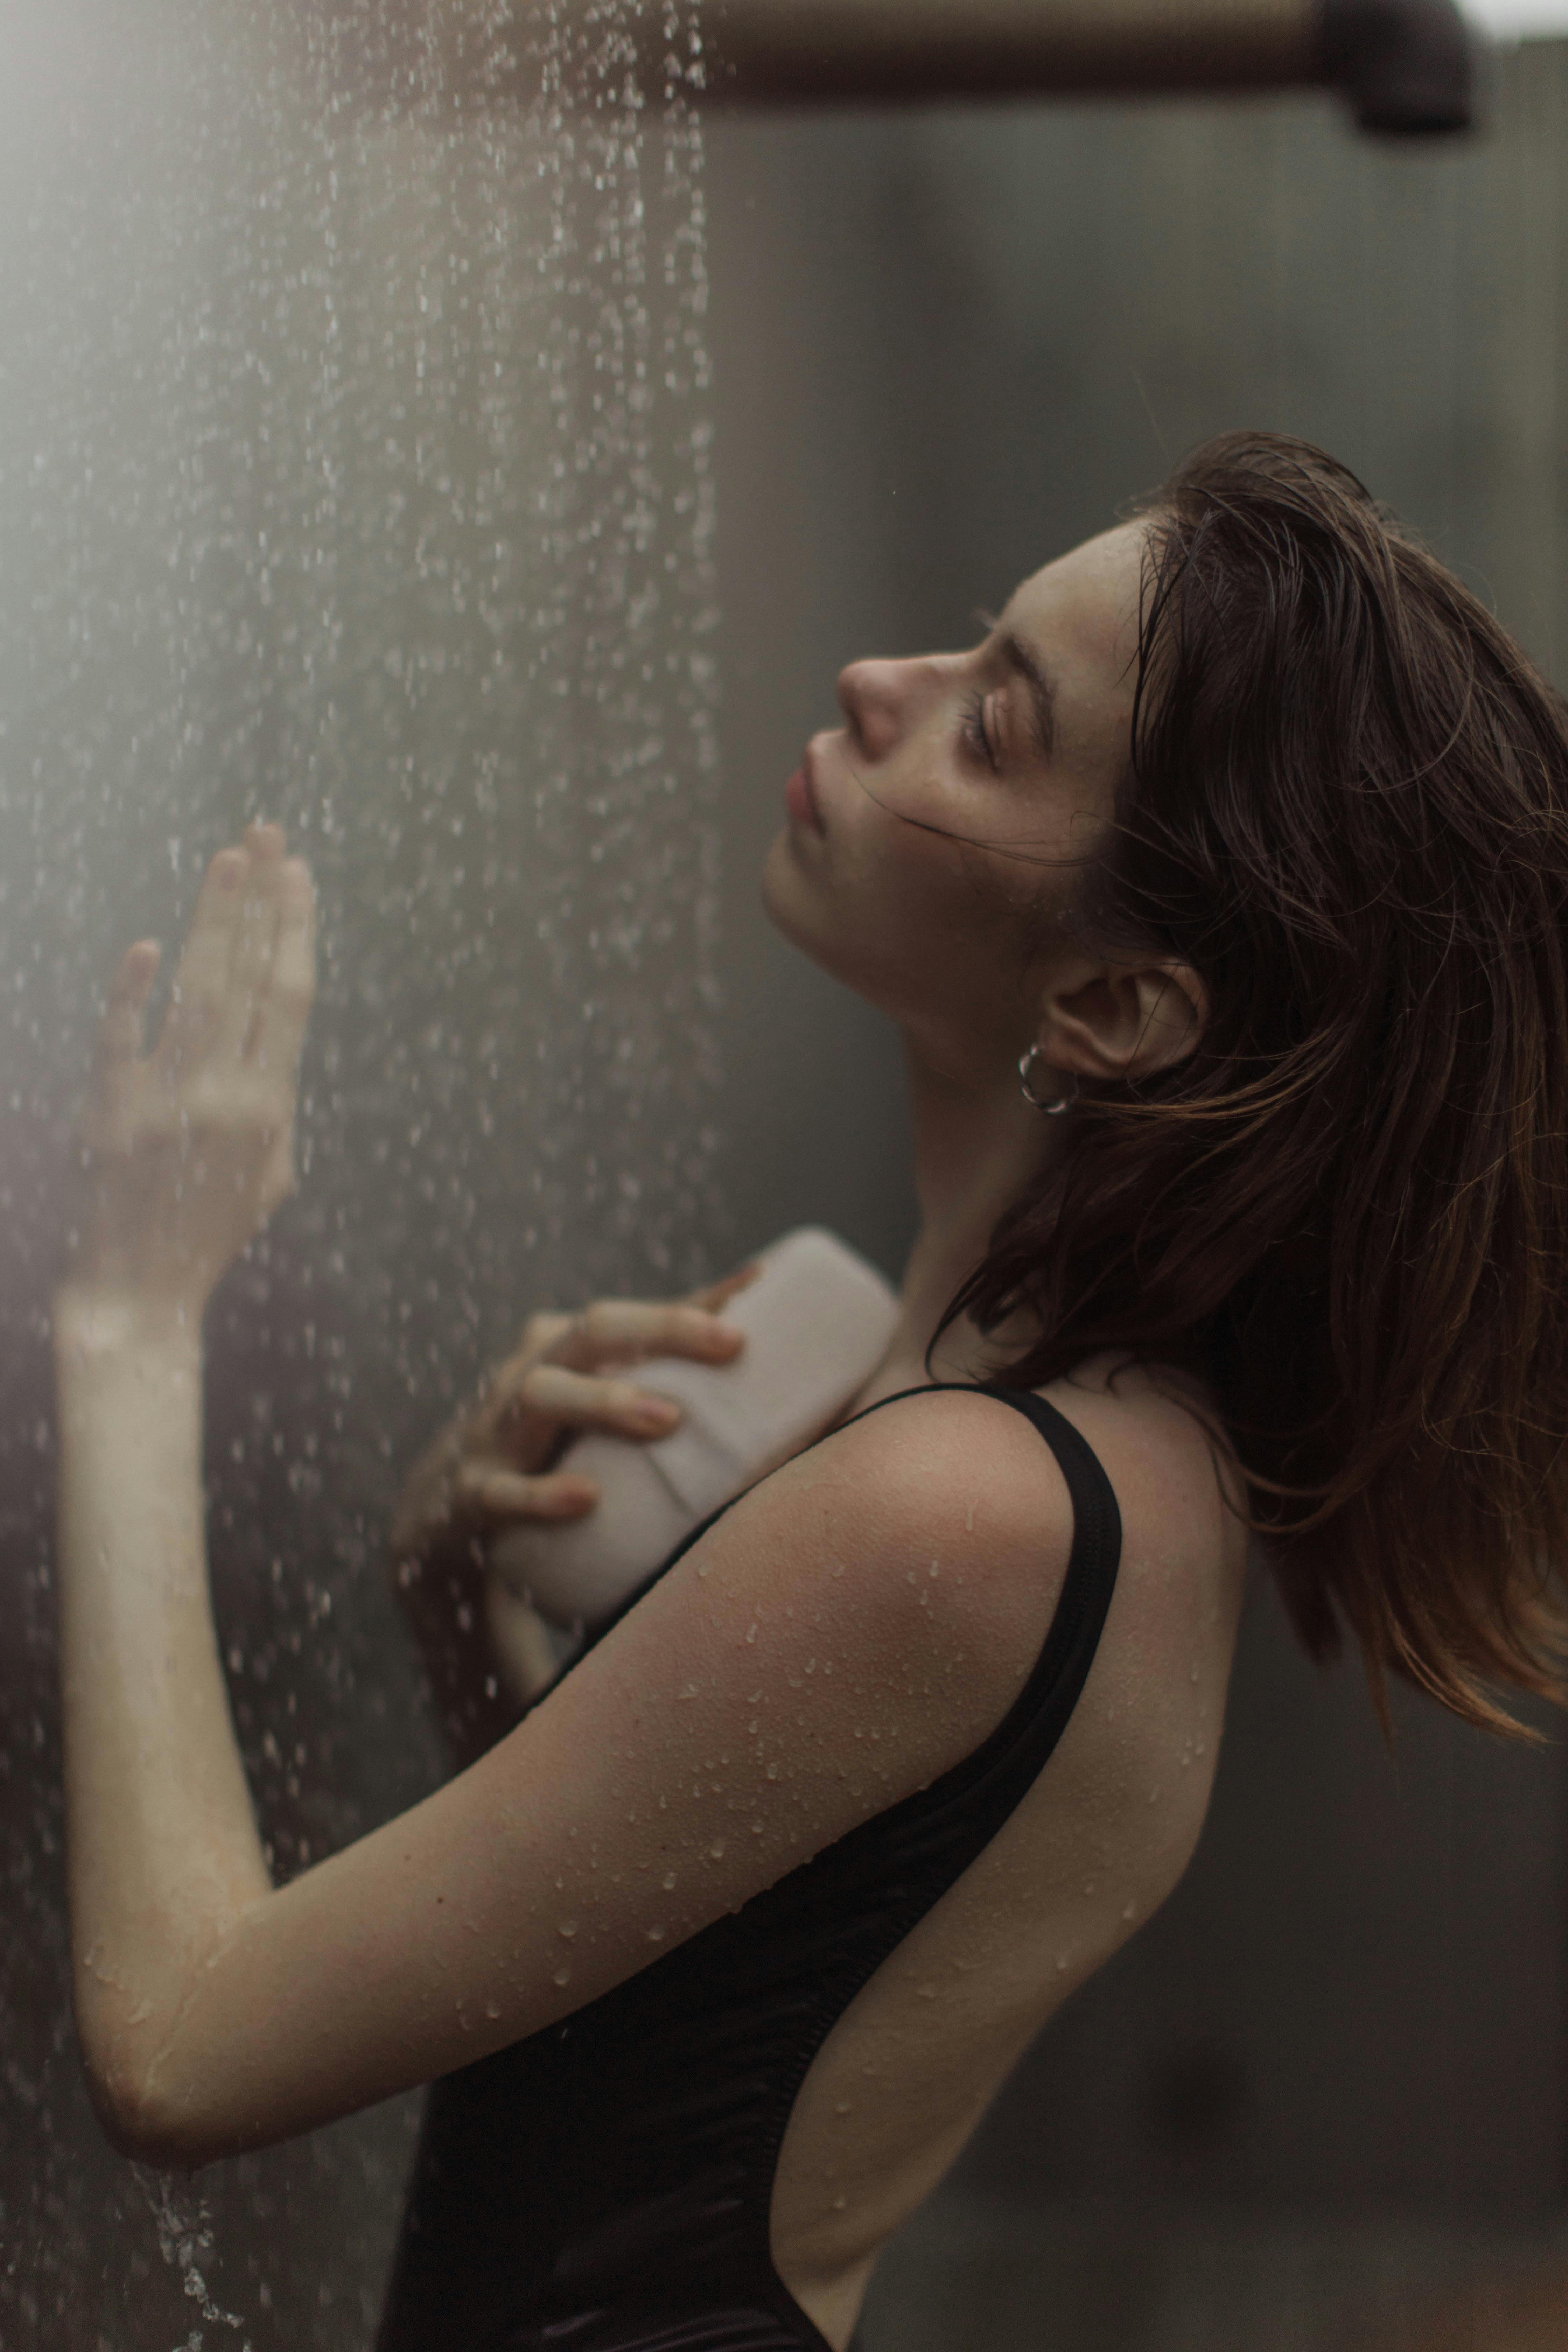 A woman under a shower | Source: Pexels